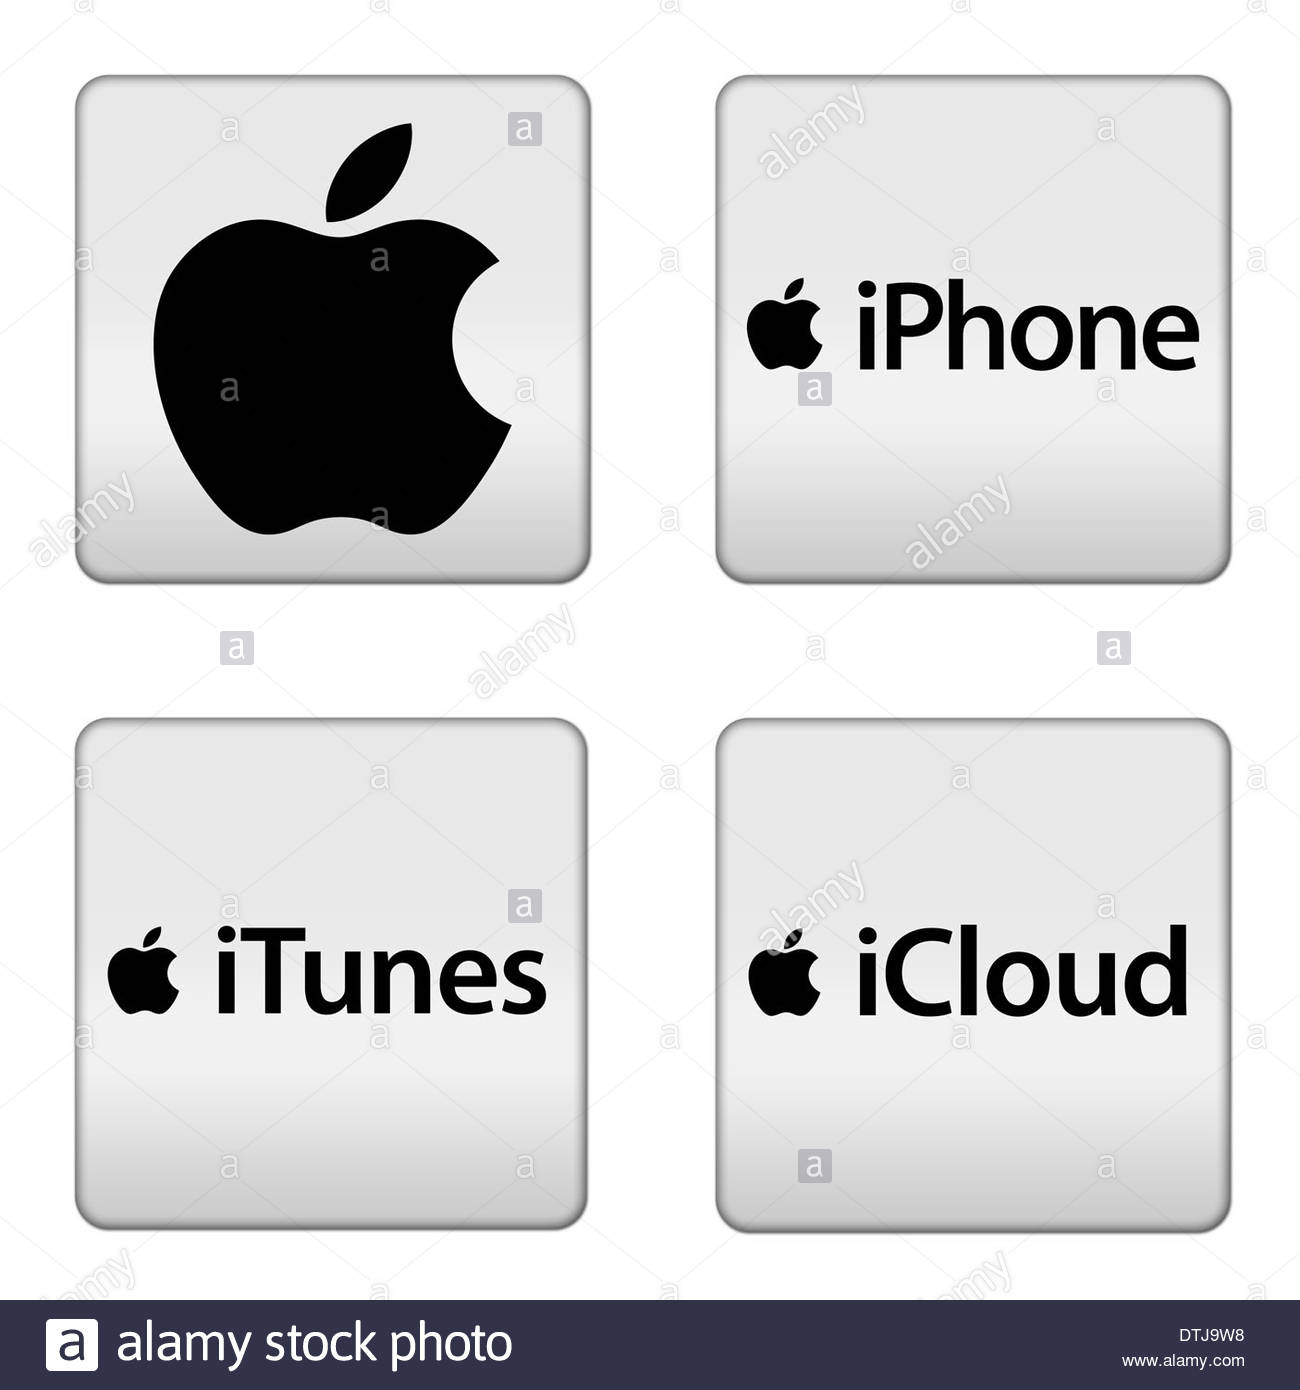 Apple iphone itunes icloud icon logo app button Stock ...